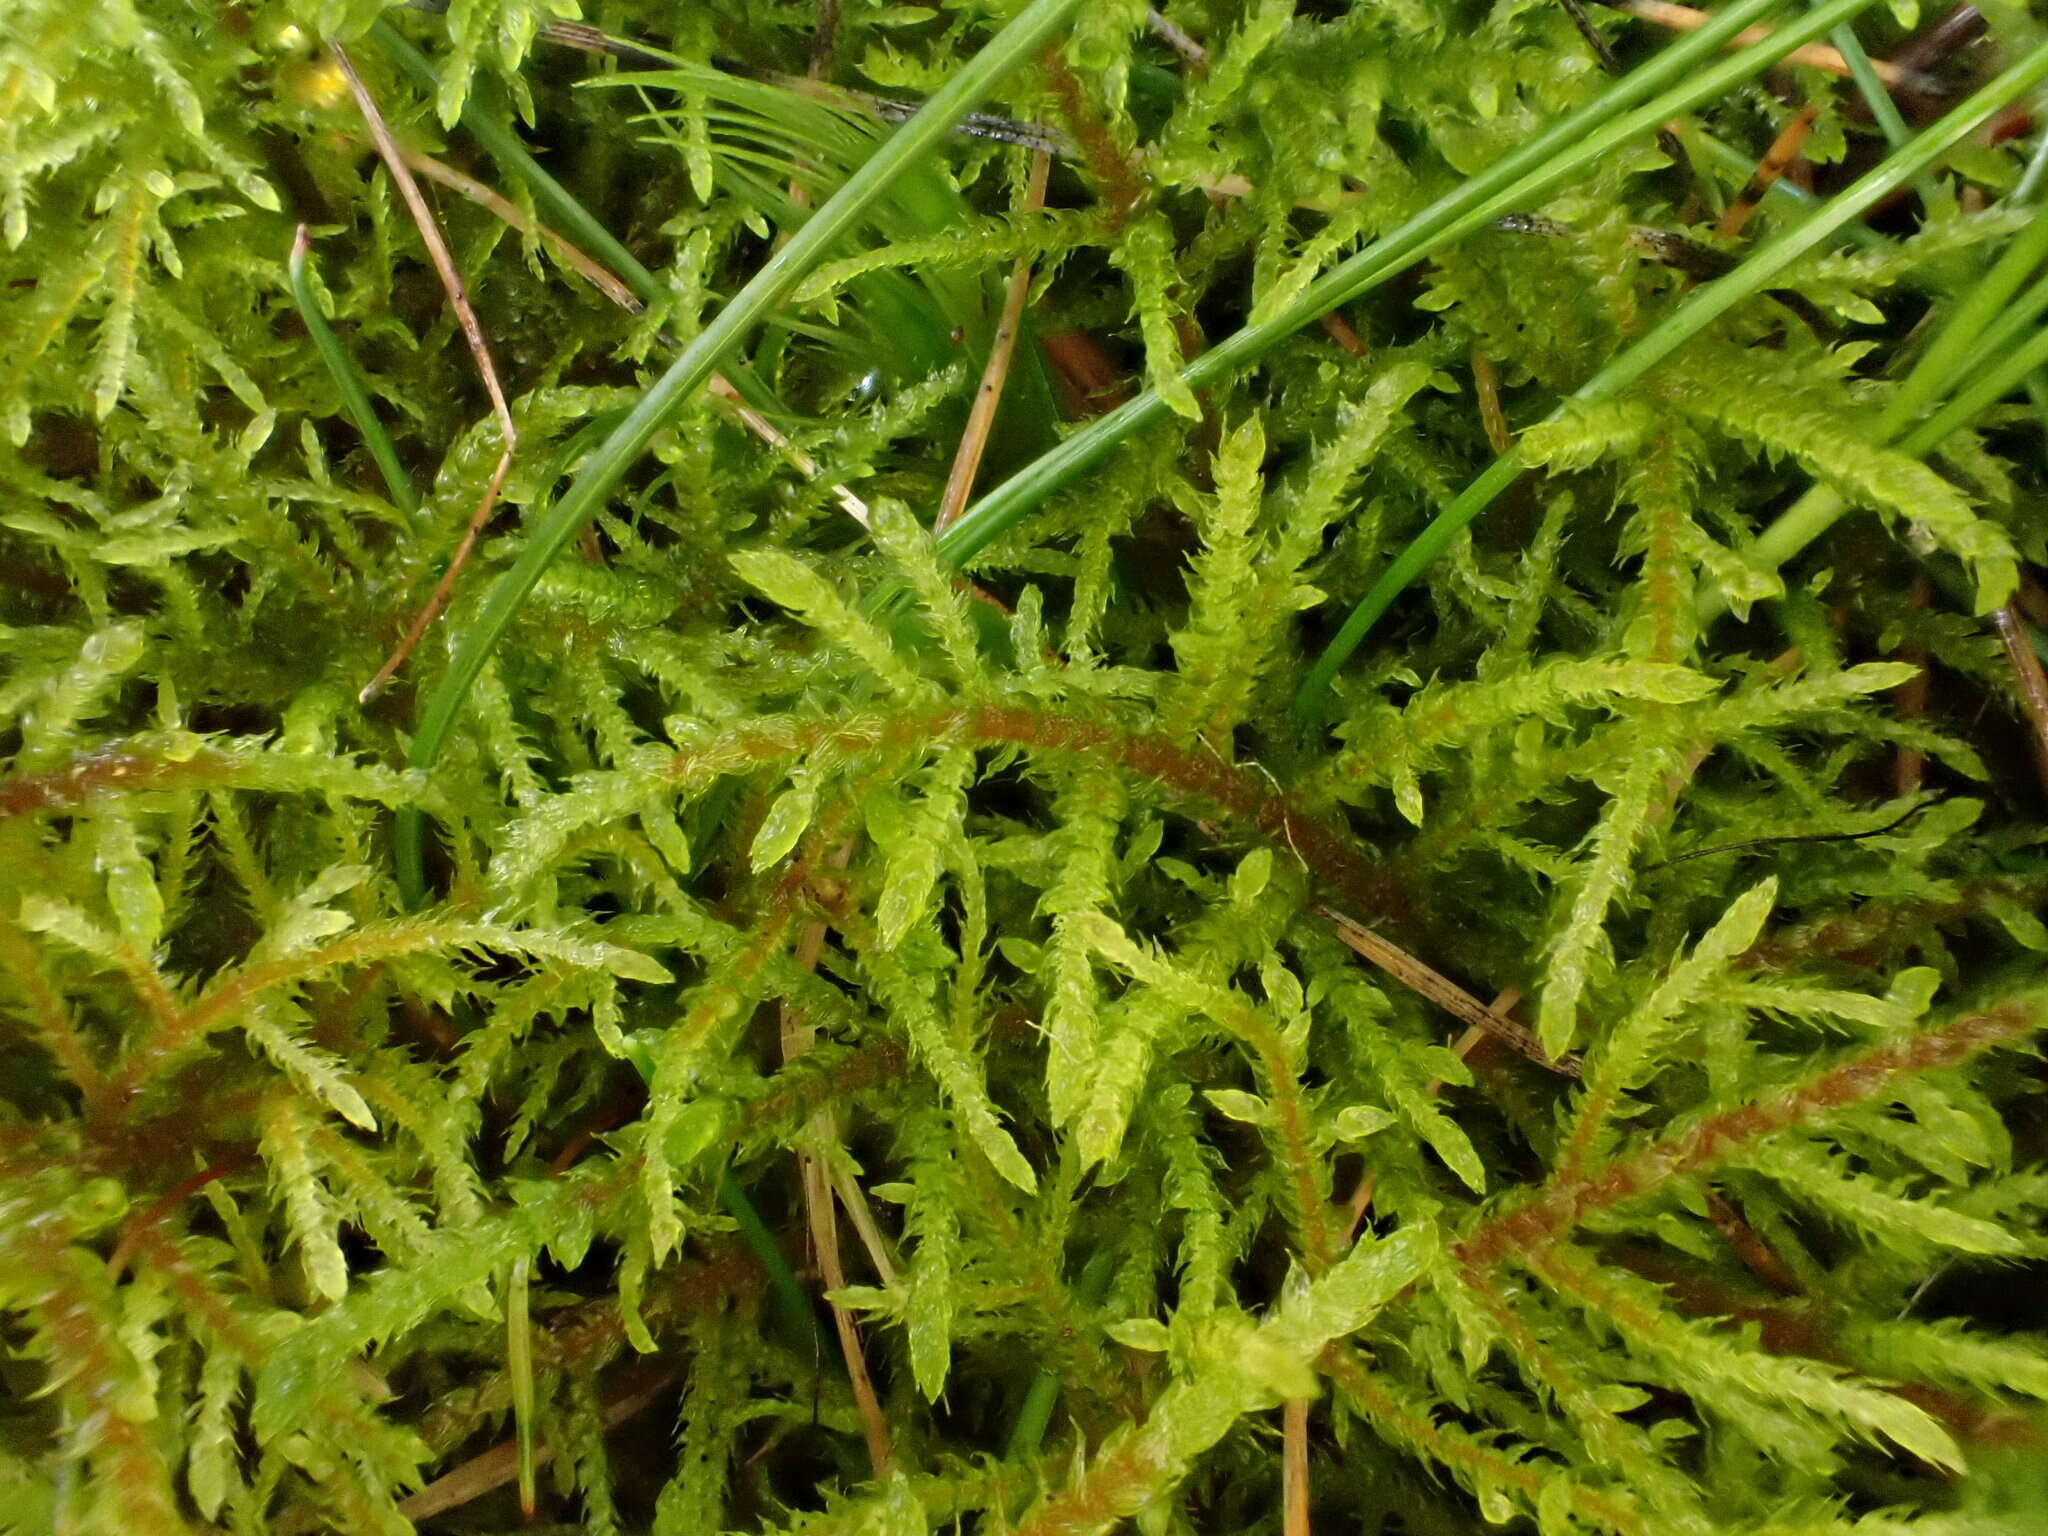 Image of hylocomiastrum moss